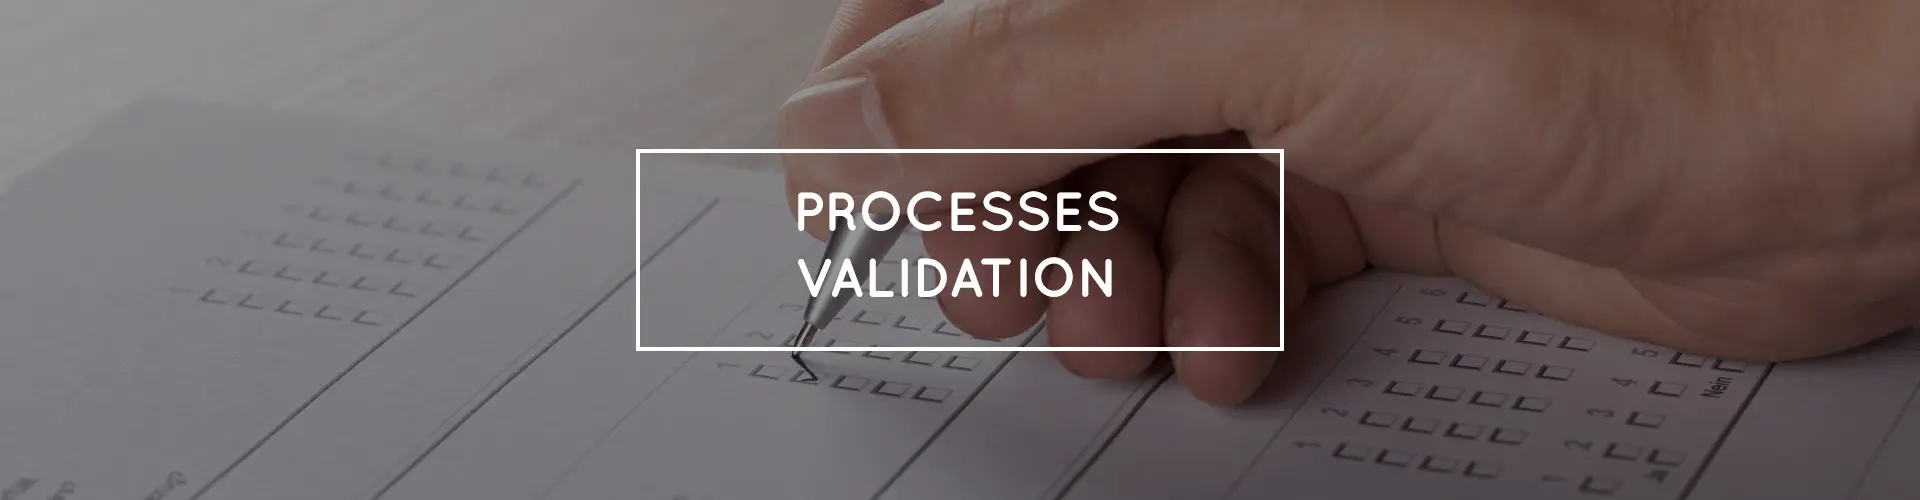 processes validation